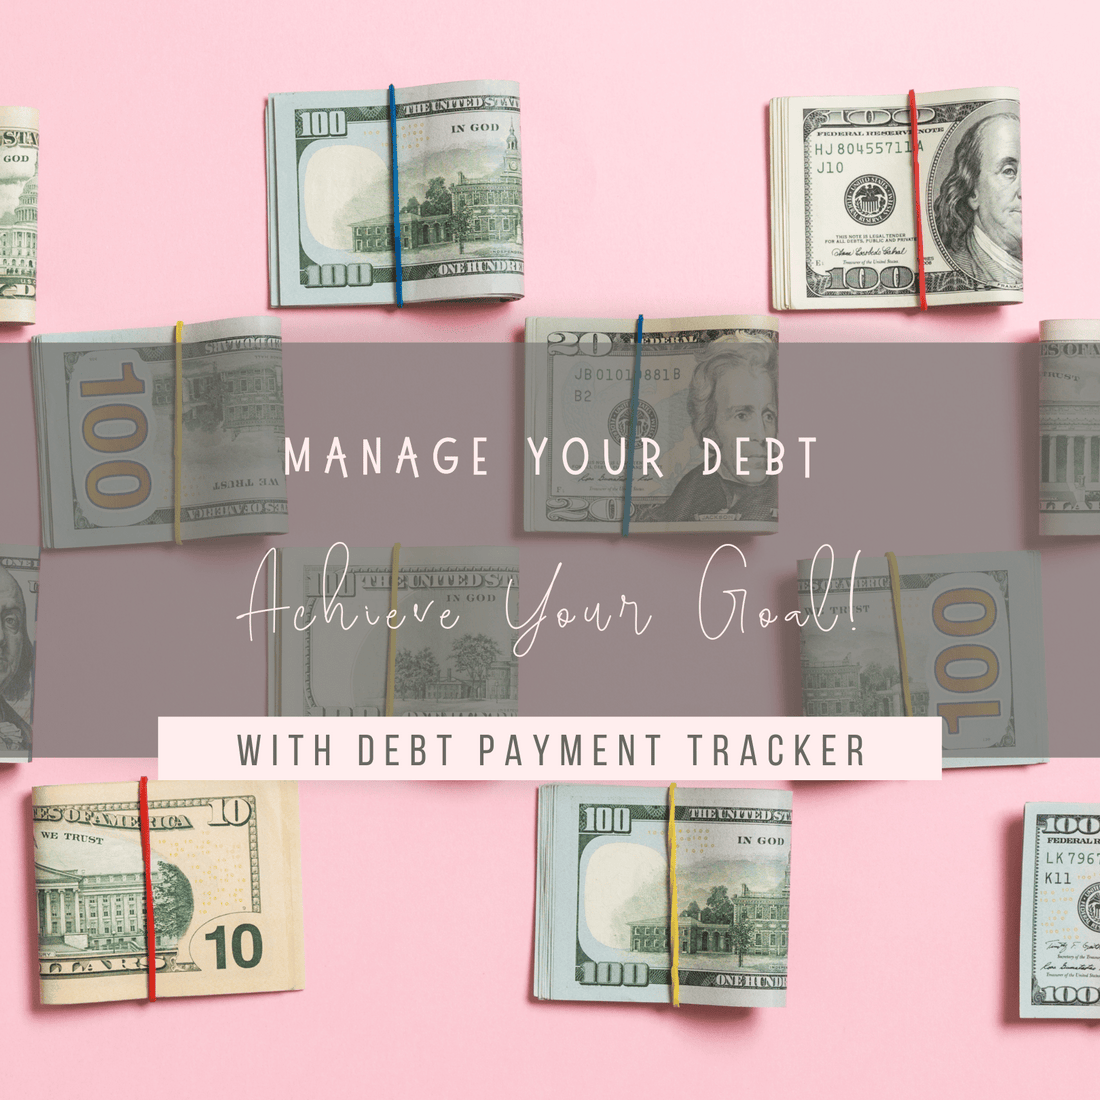 Manage Your Debt, Achieve Your Goals!